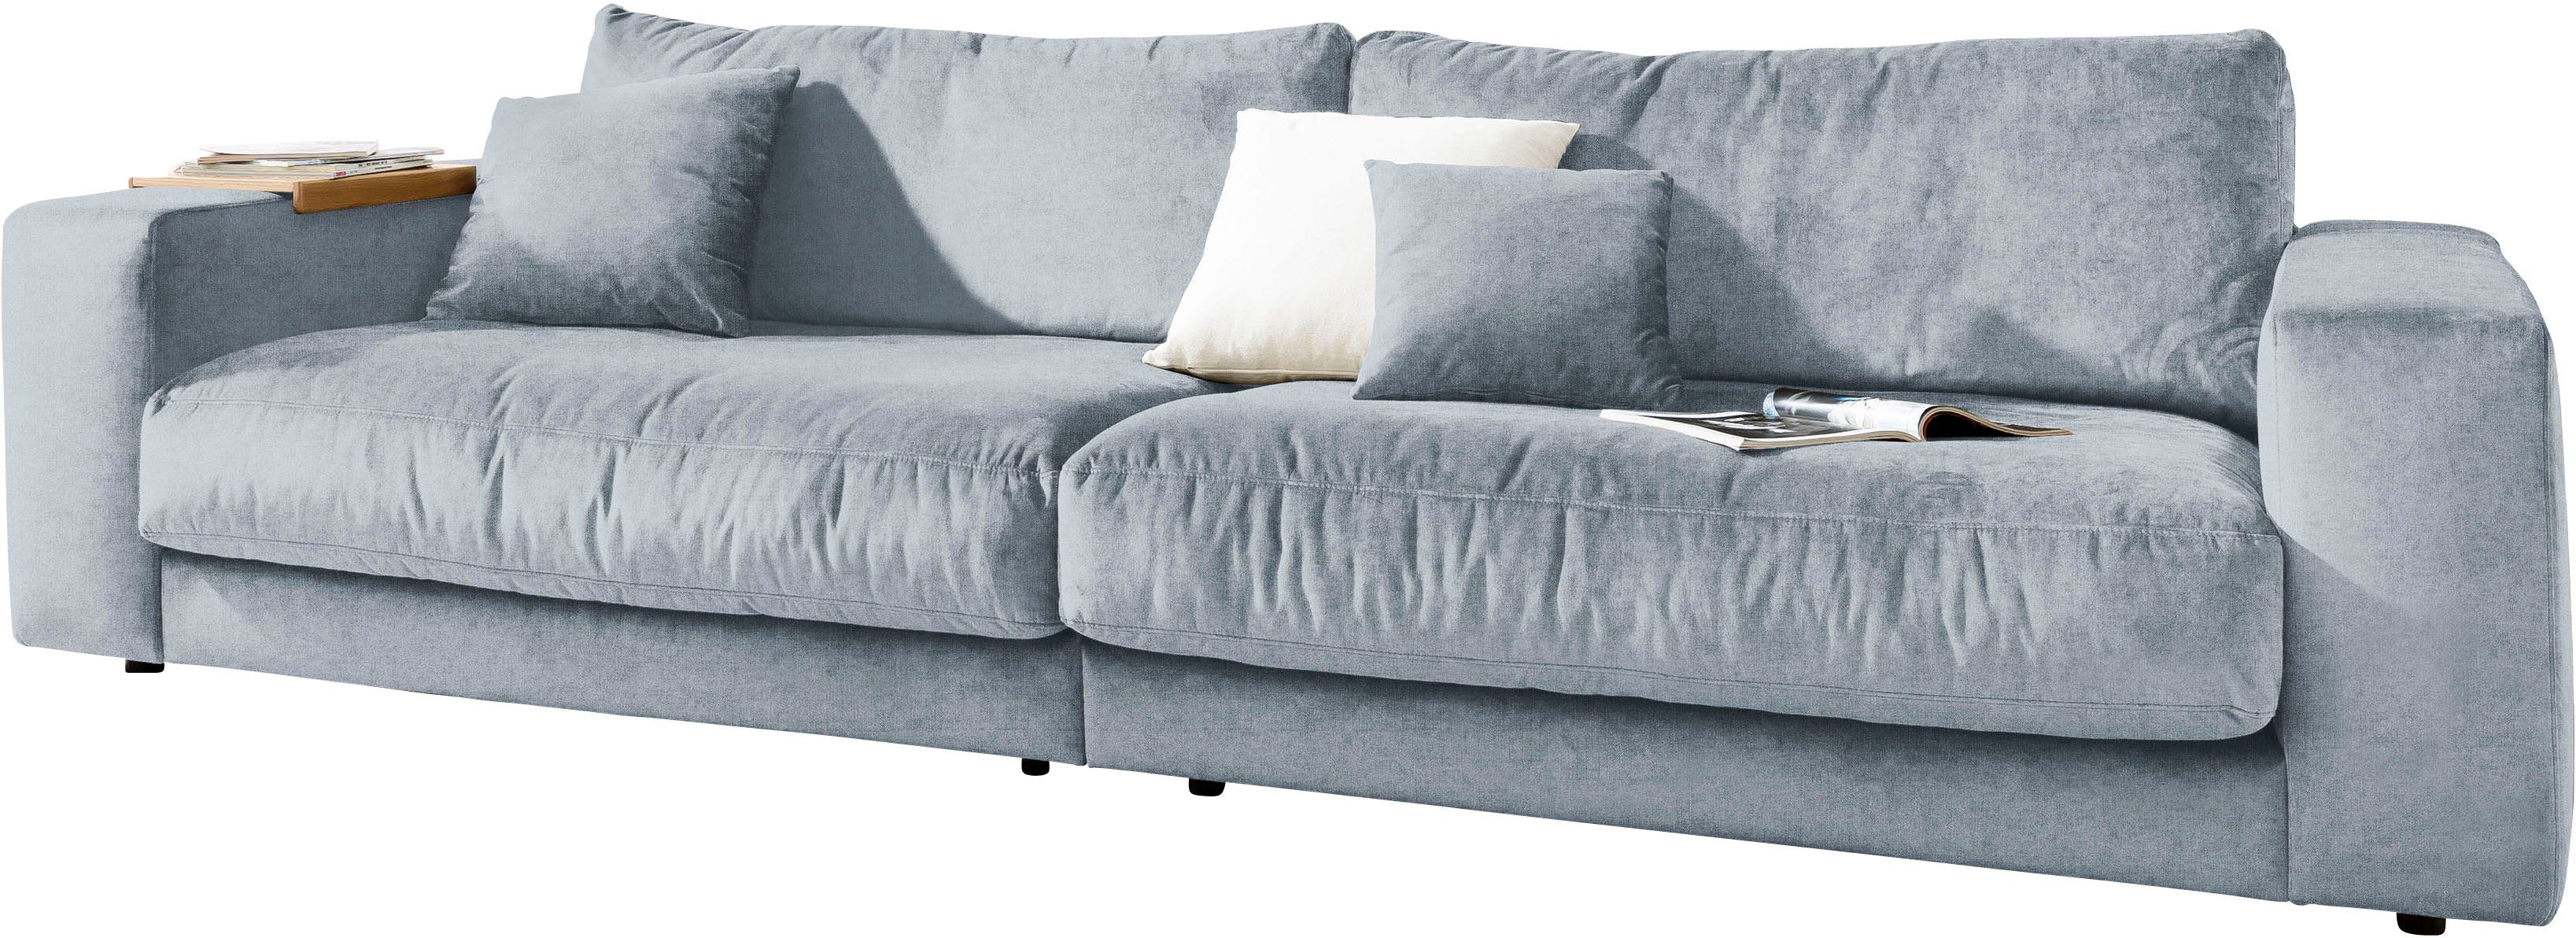 3C Candy Big-Sofa Enisa II, incl. 1 care mit Flatterkissen, Wahlweise Easy Flecken-Schutz-Bezug